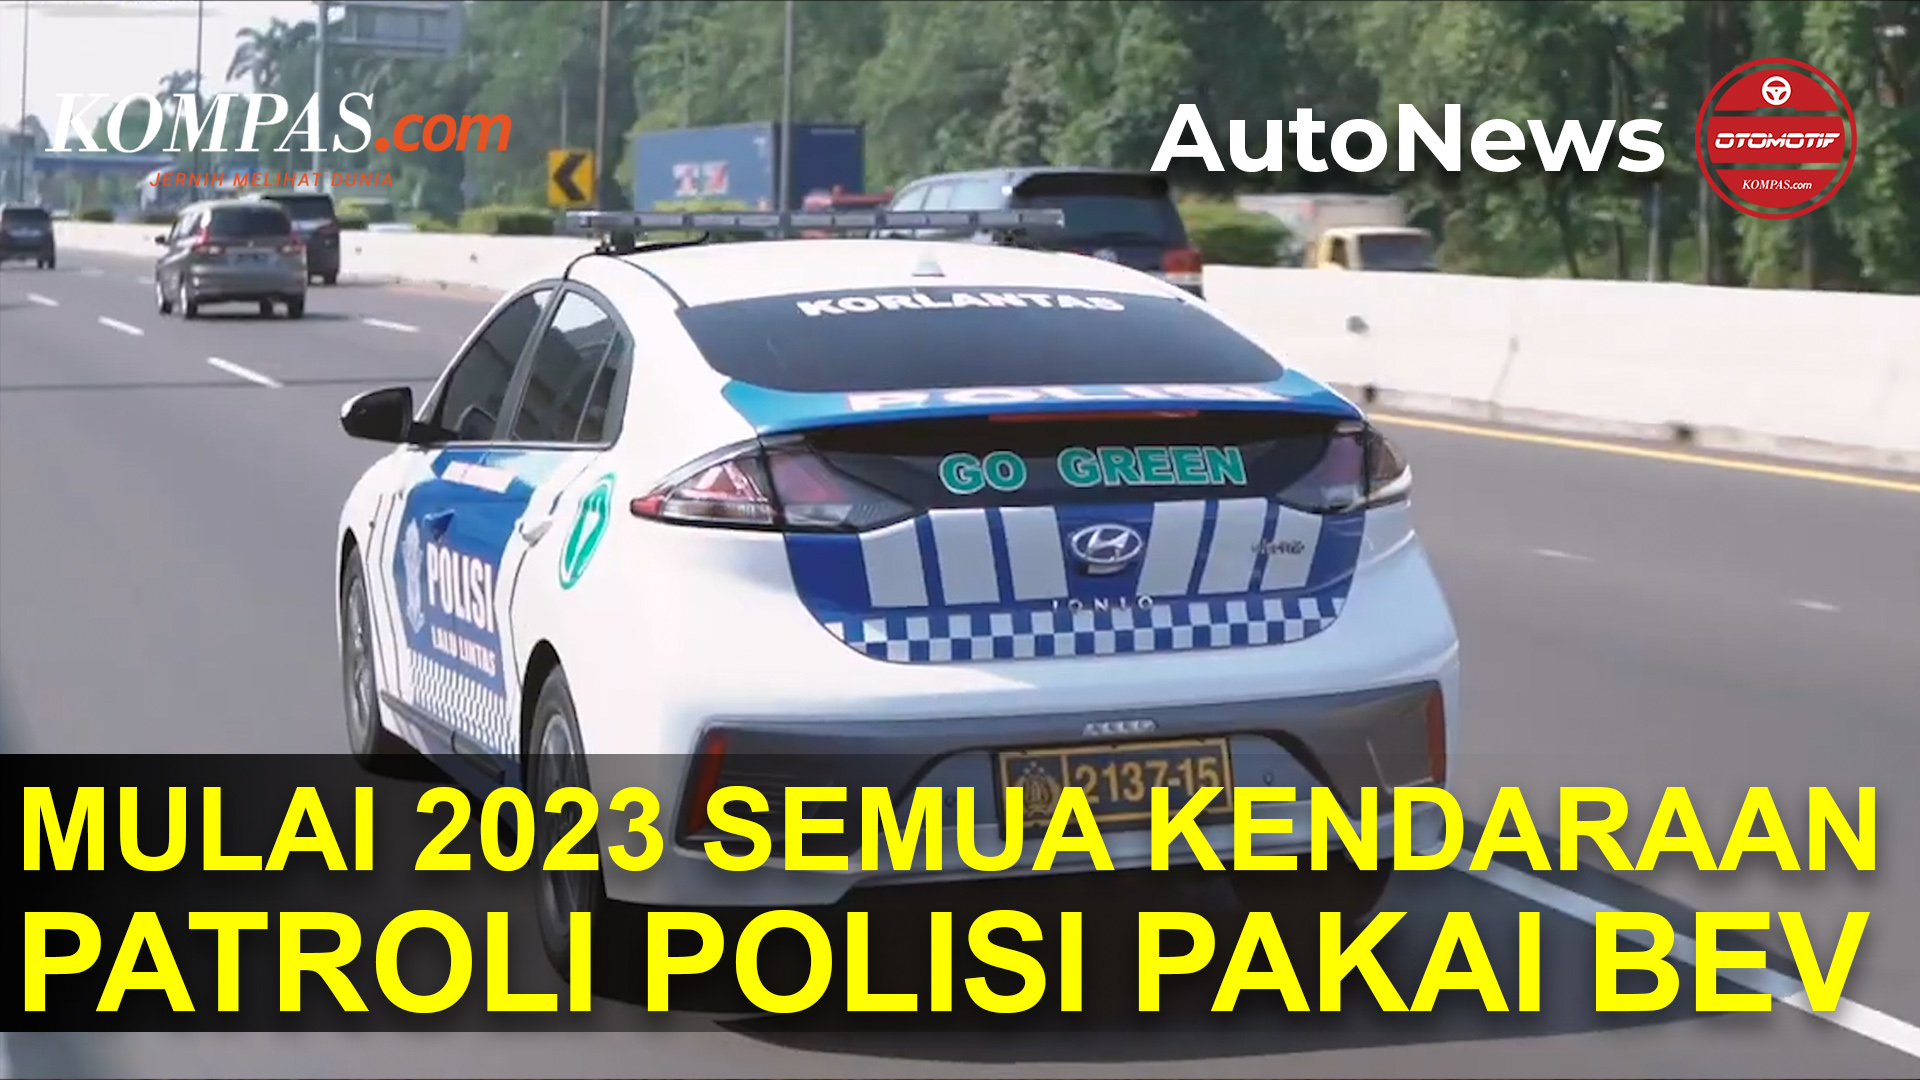 Semua Kendaraan Patroli Polisi Pakai BEV Mulai 2023